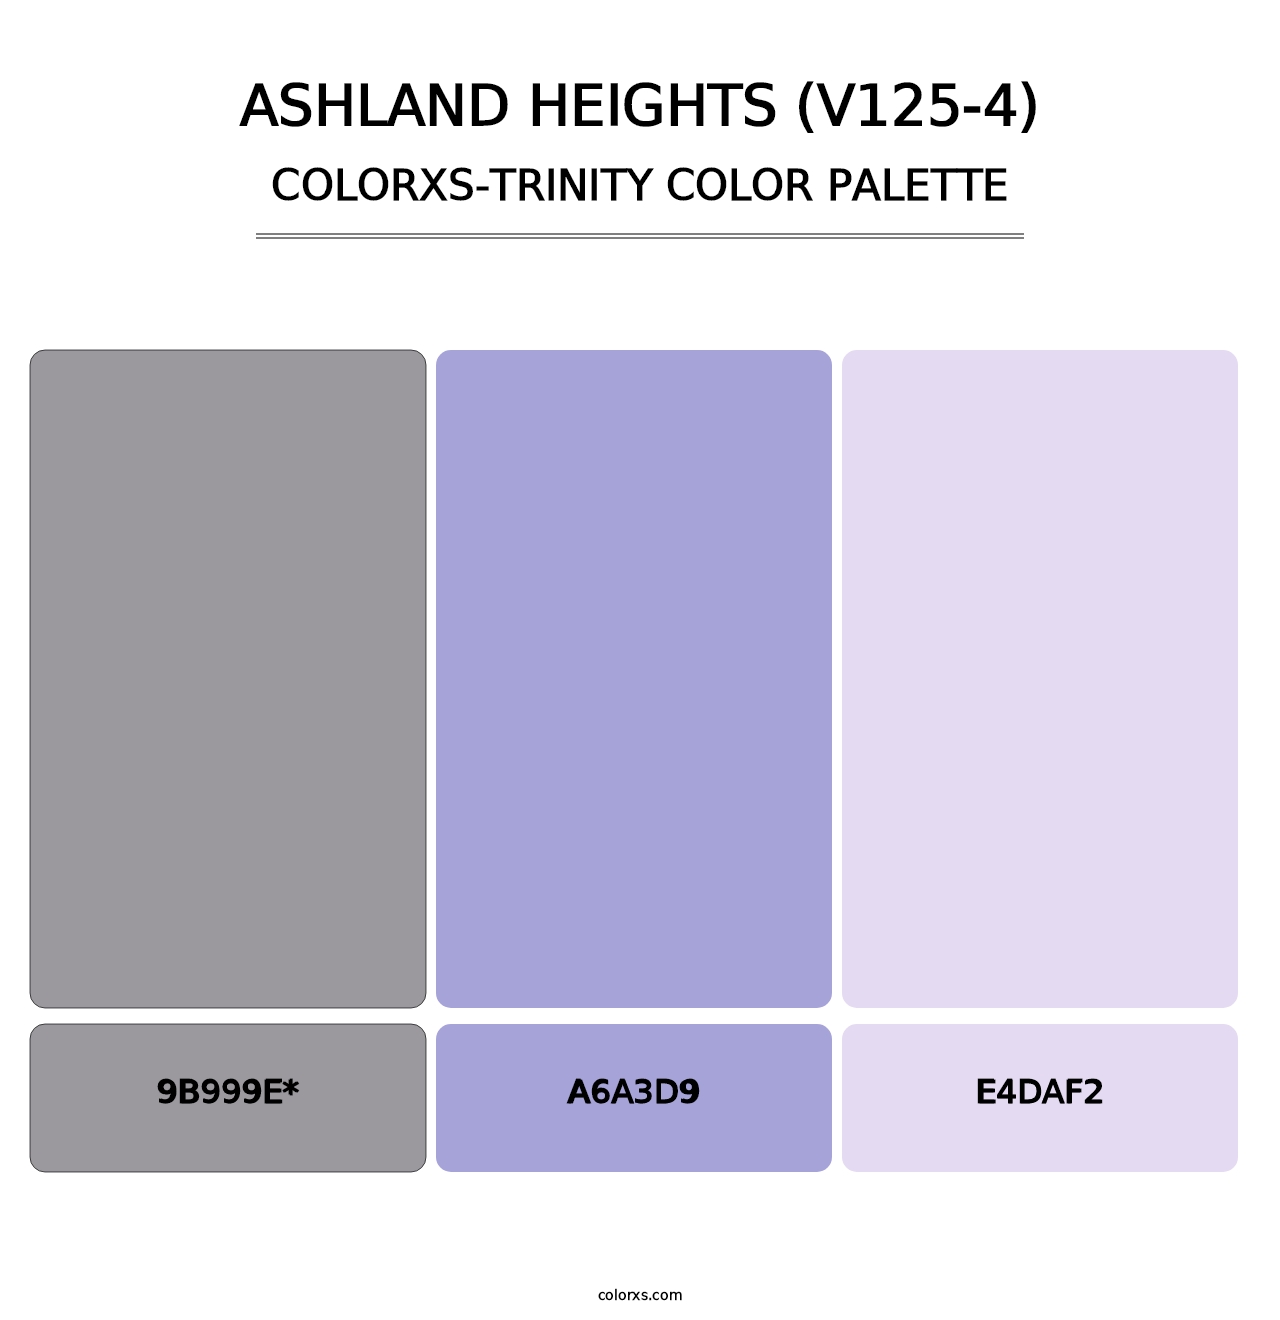 Ashland Heights (V125-4) - Colorxs Trinity Palette